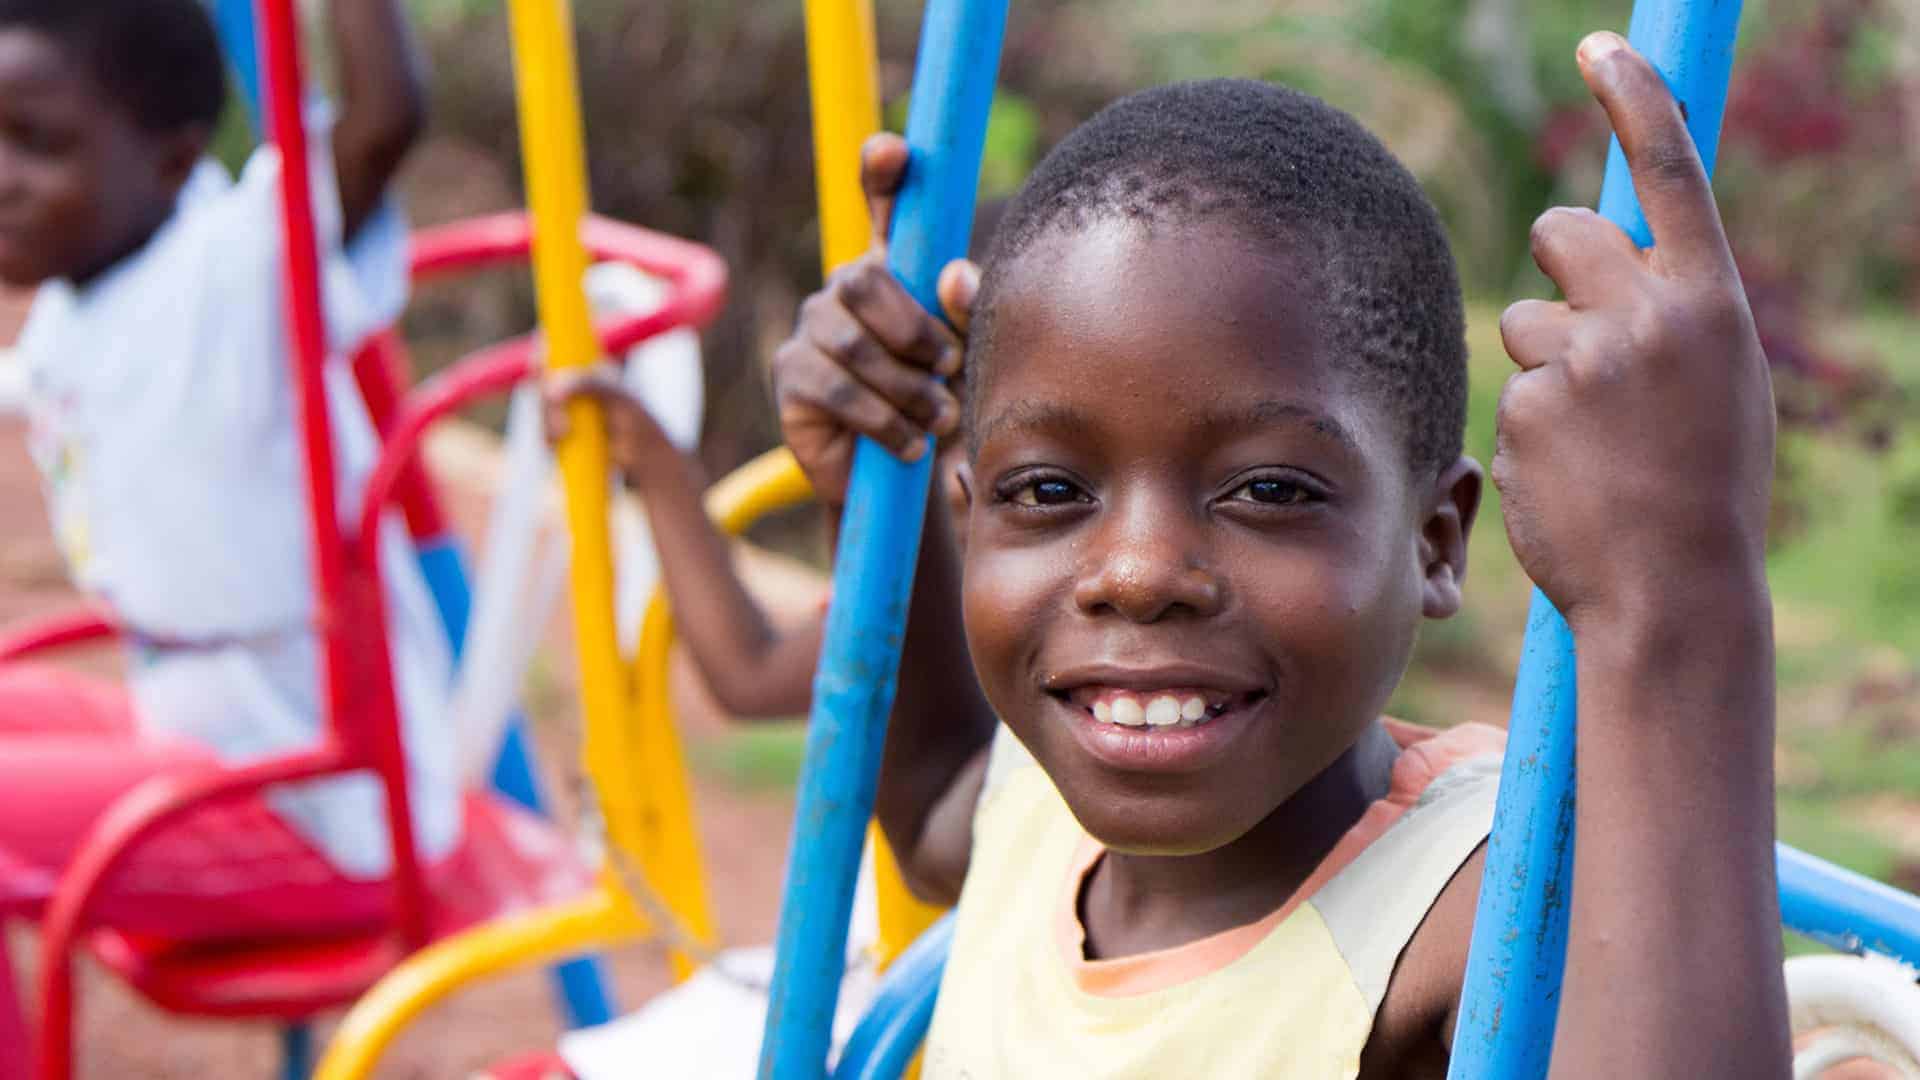 A smiling 13-year old Ugandan boy swinging on a colorful swing